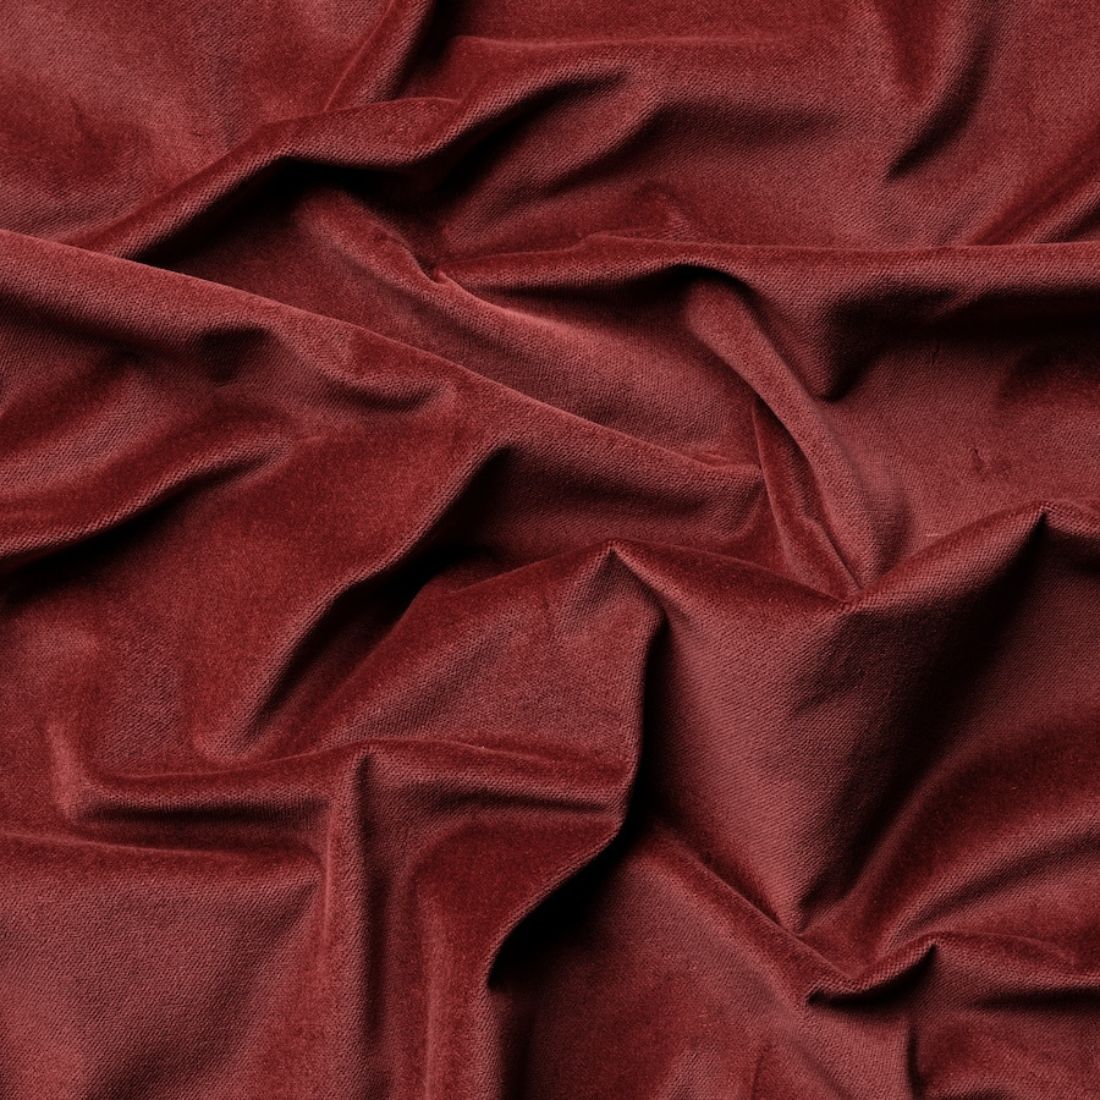 Pair of Dark Red Velvet Curtains